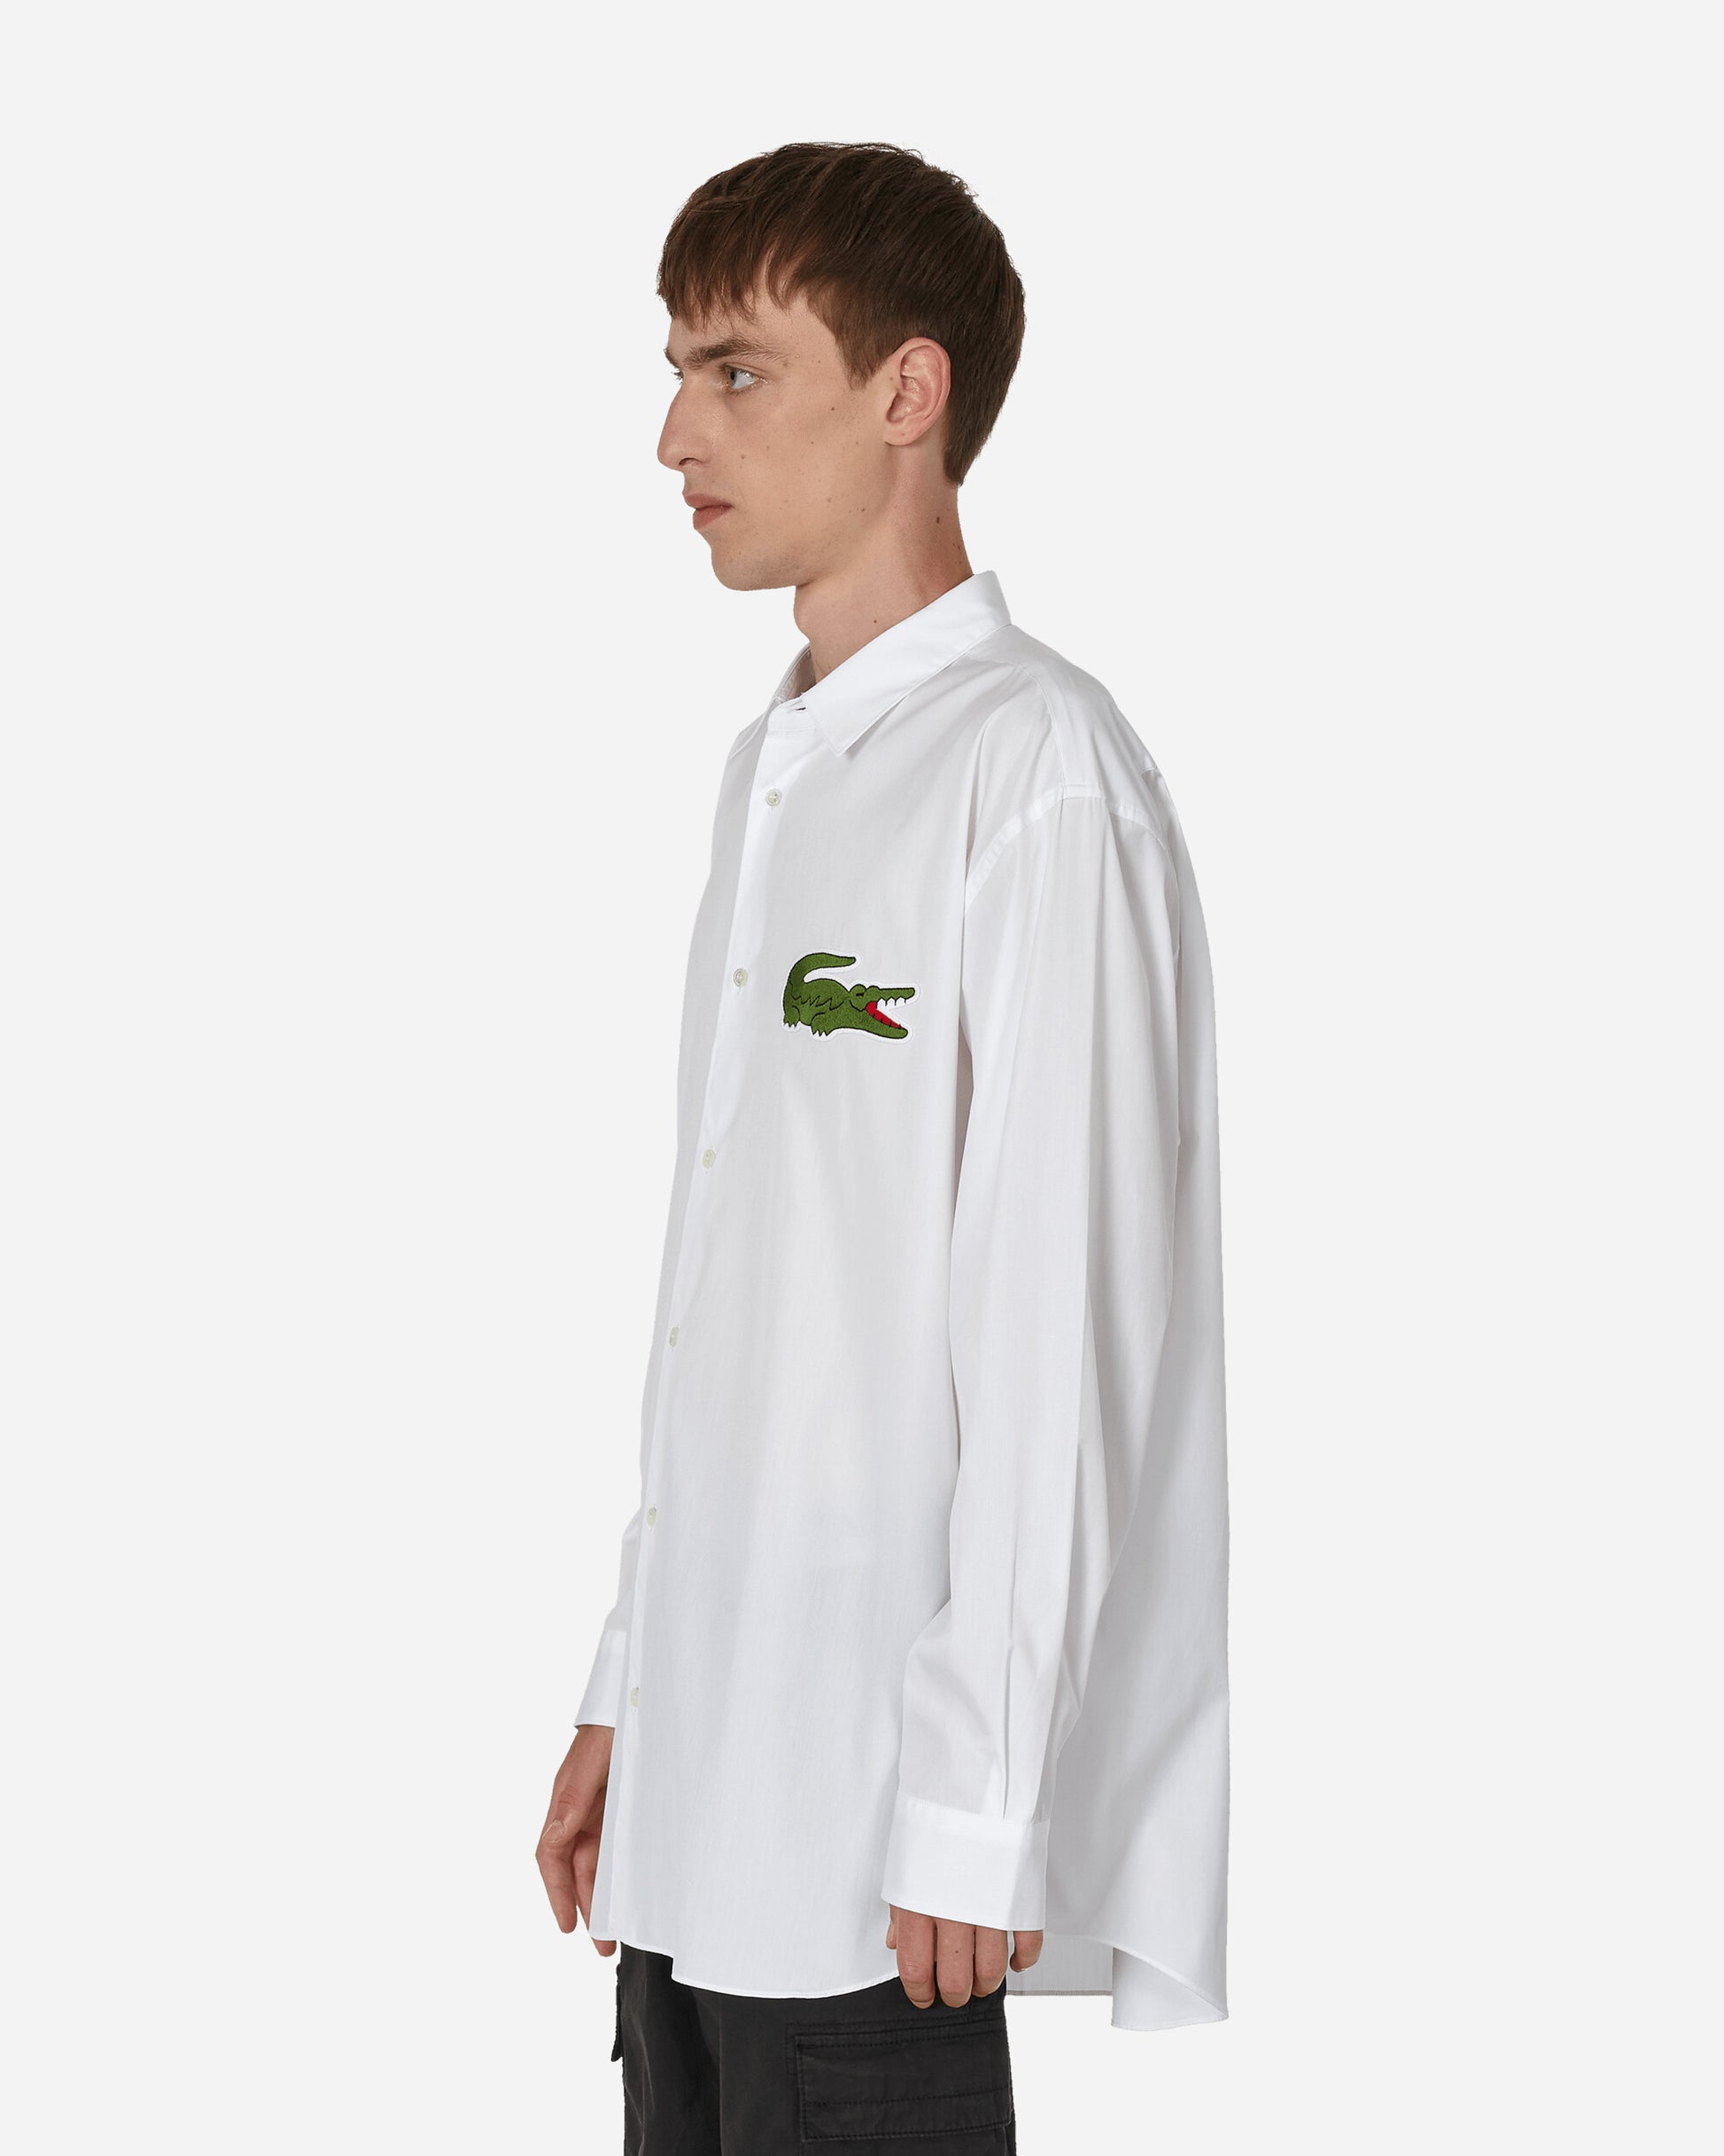 Comme Des Garçons Shirt Mens Shirt Woven X Lacoste White Shirts Longsleeve Shirt FL-B003-W23  1